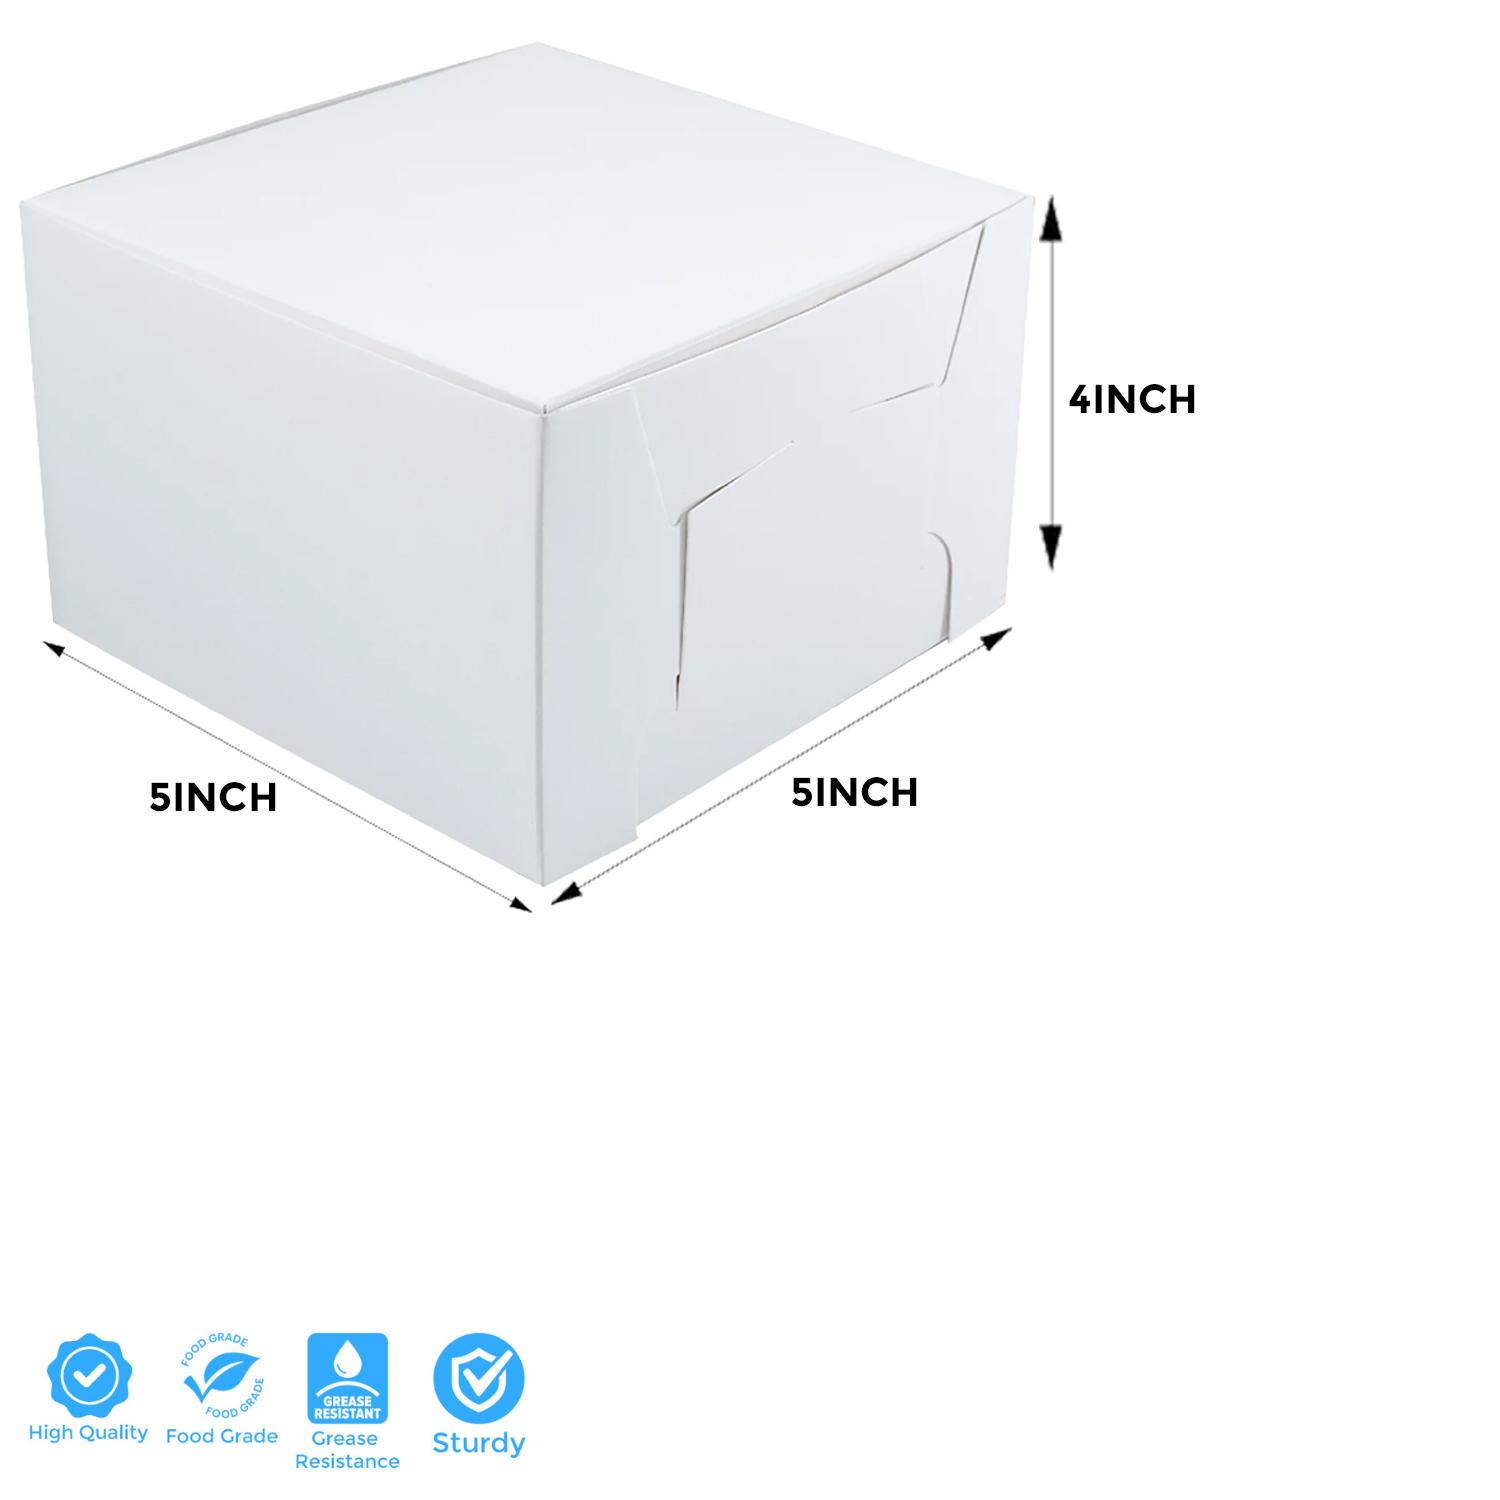 WHITE 5 X 5 X 4-INCH CAKE BOX